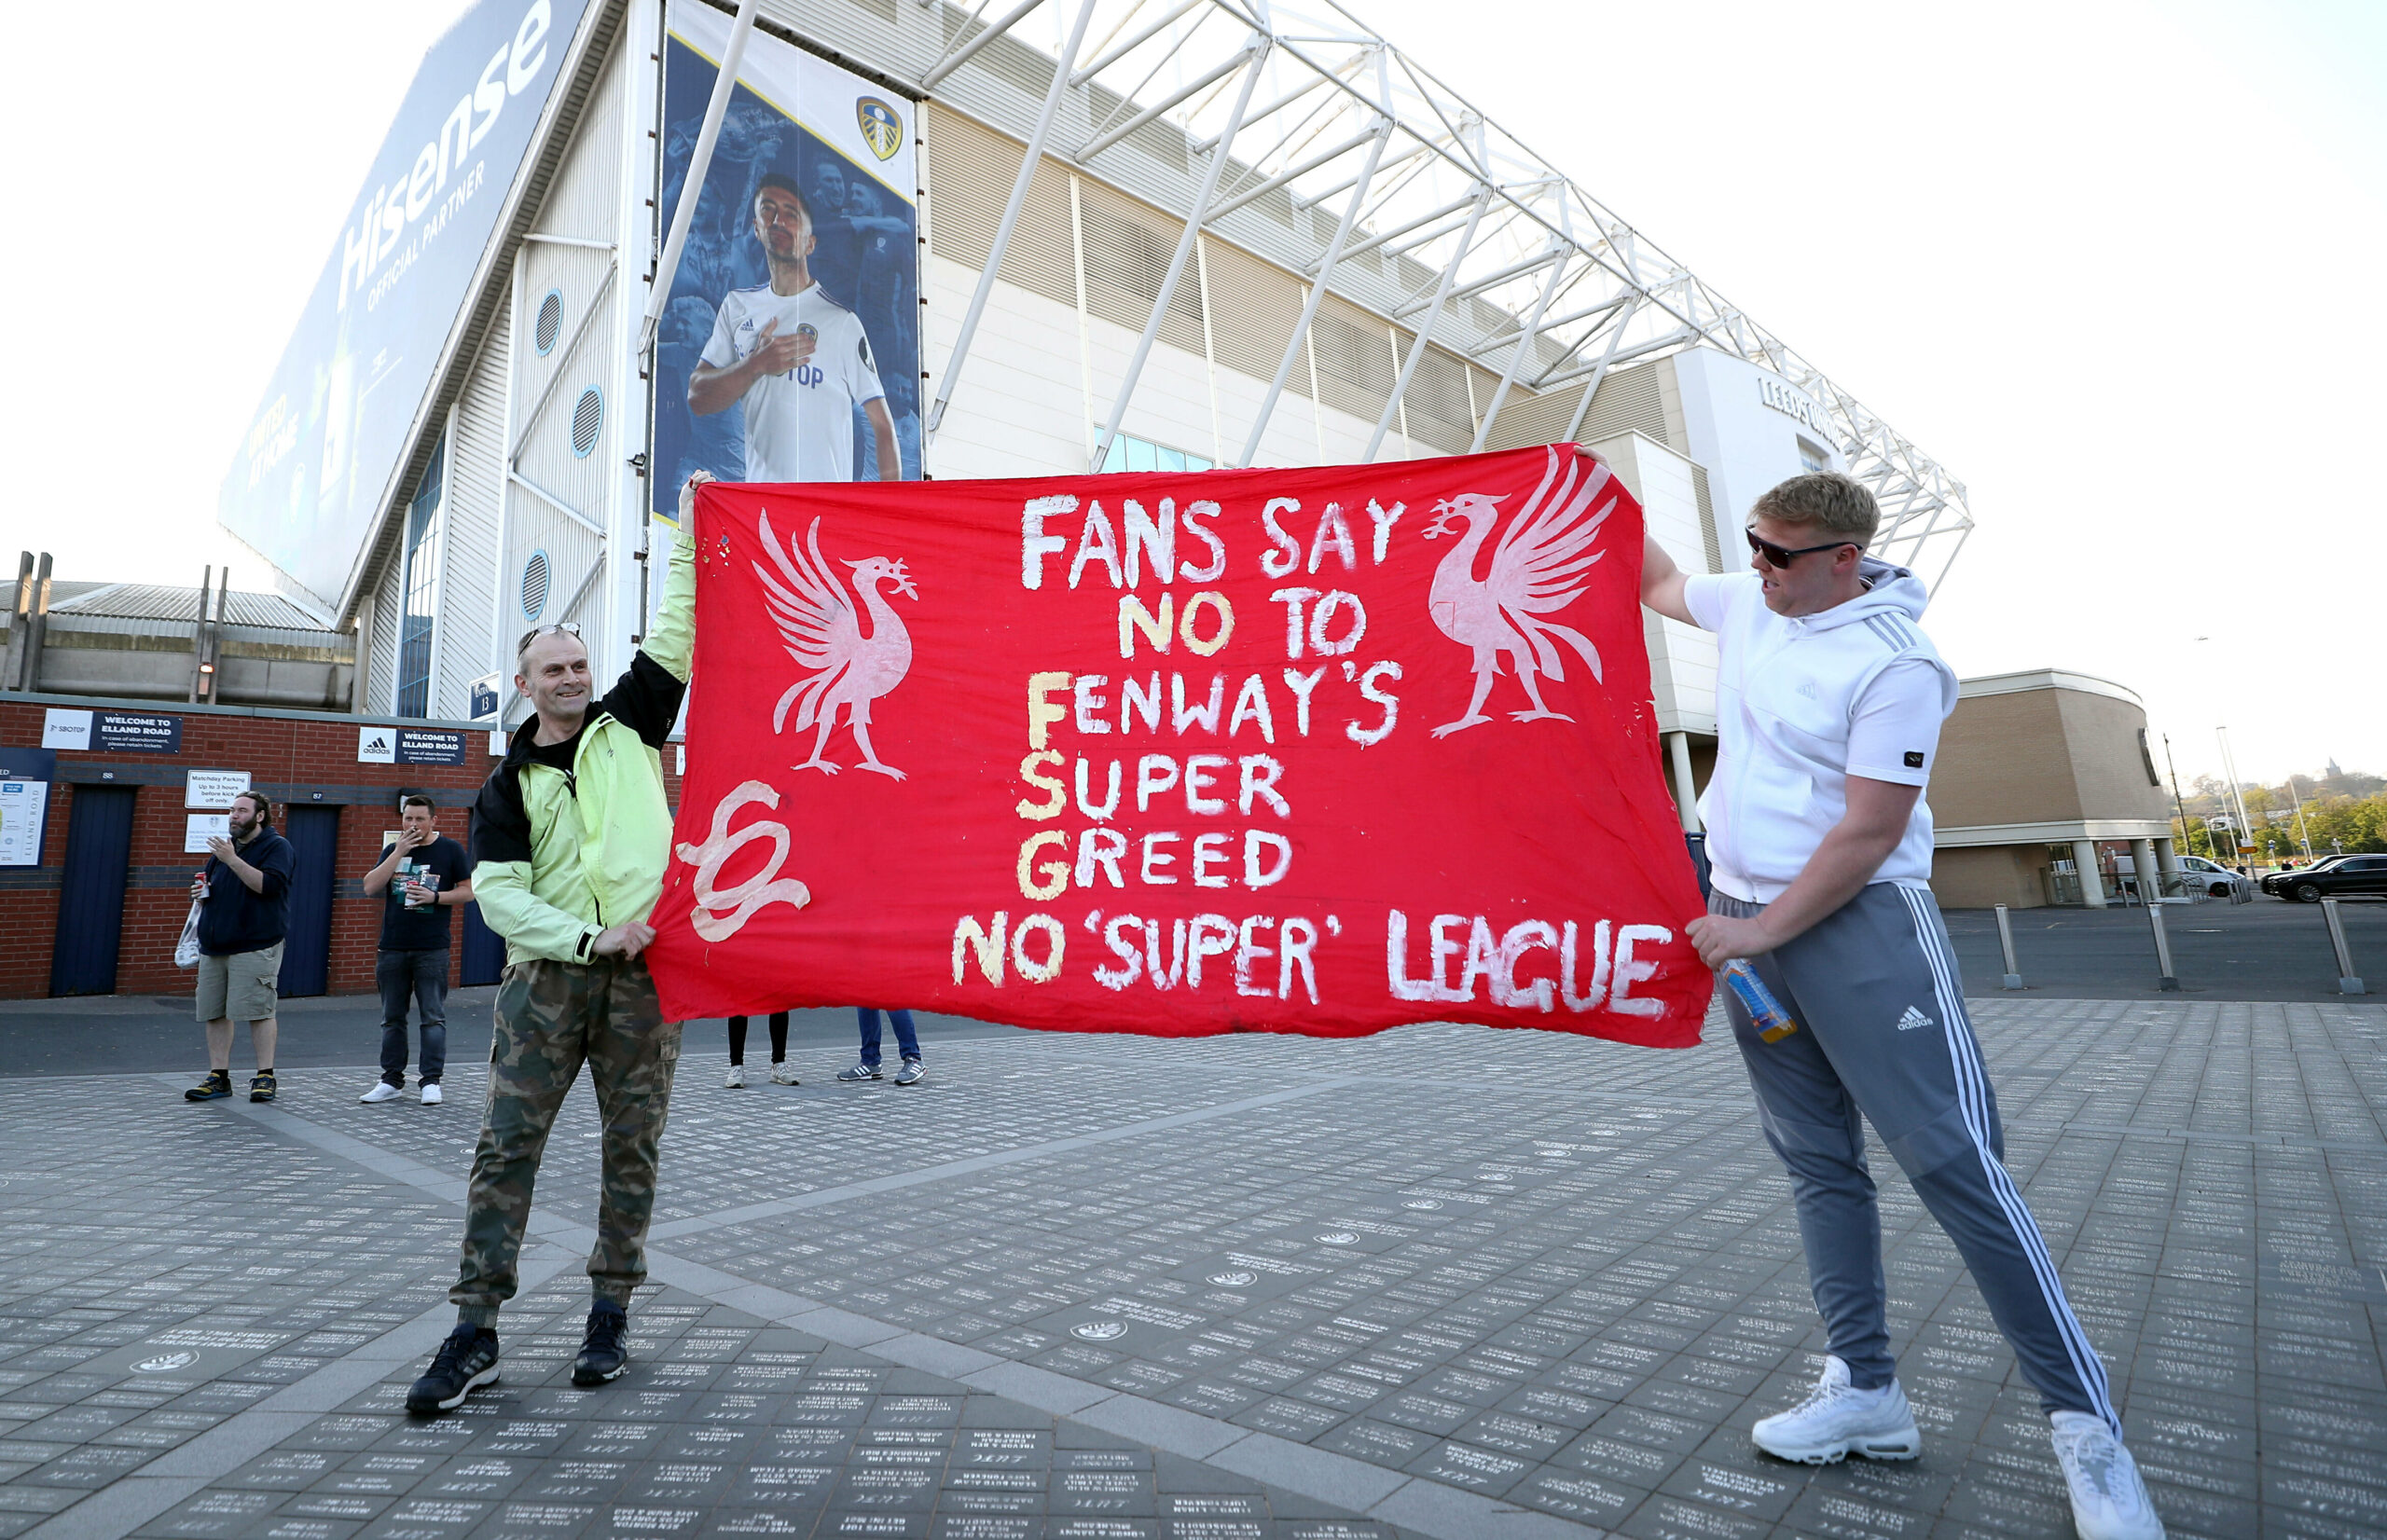 Nach Super-League-Debakel: Liverpool kündigt Gespräche mit Fans an